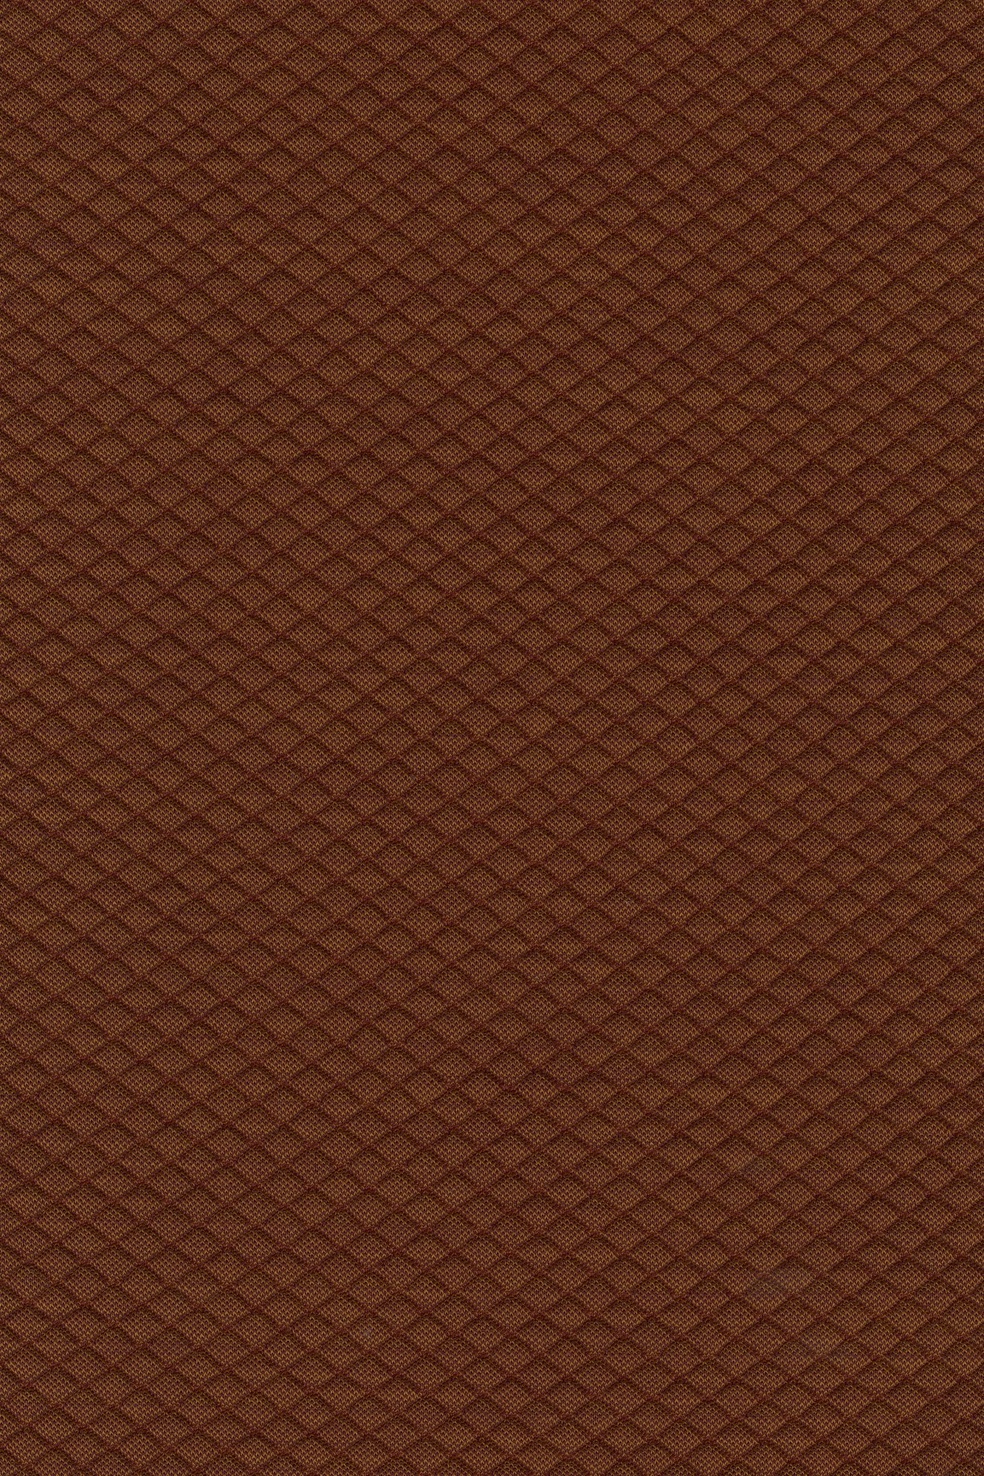 Fabric sample Mosaic 2 0472 orange